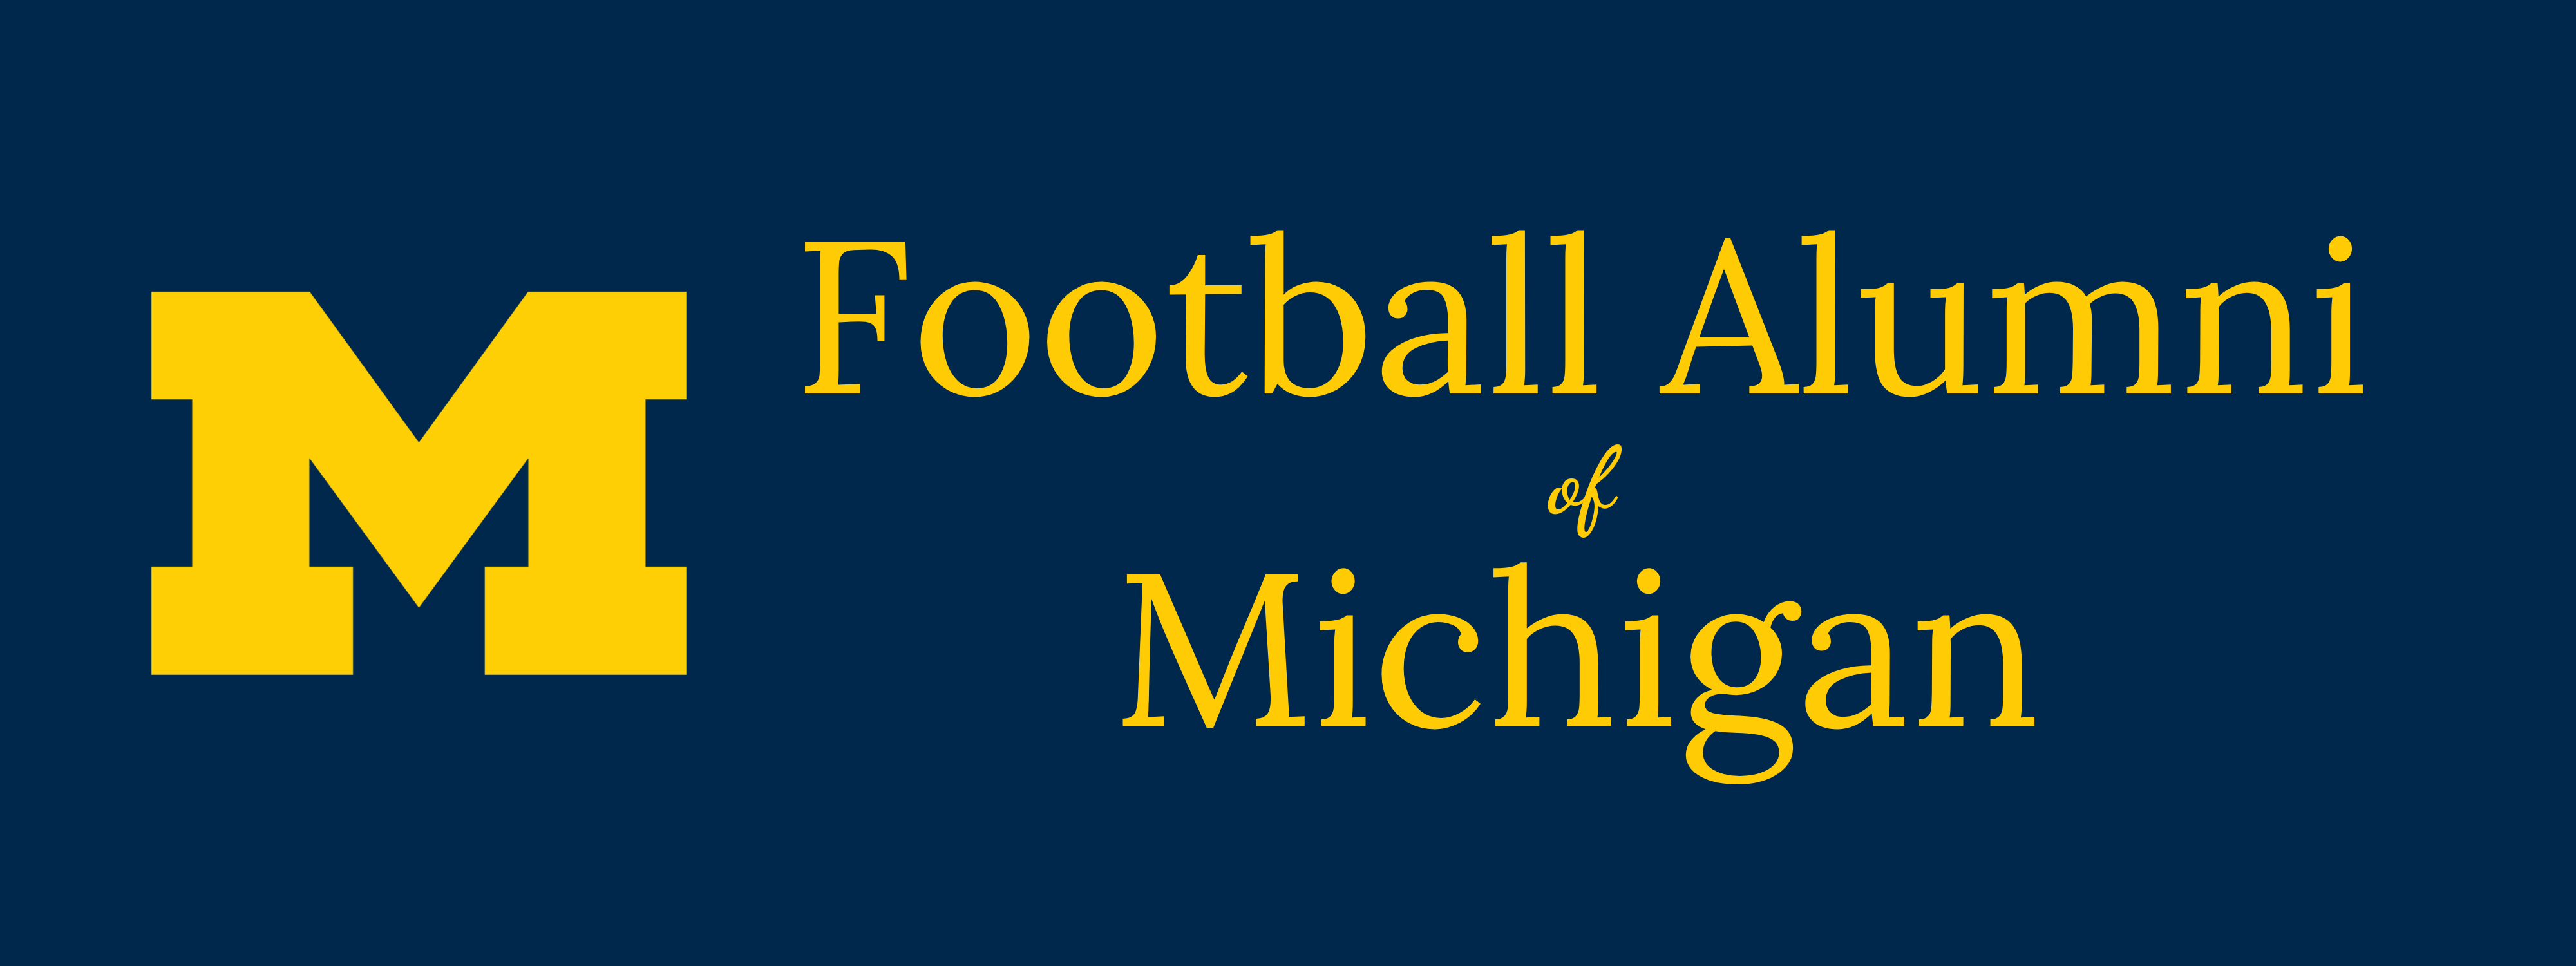 Football Alumni of Michigan logo